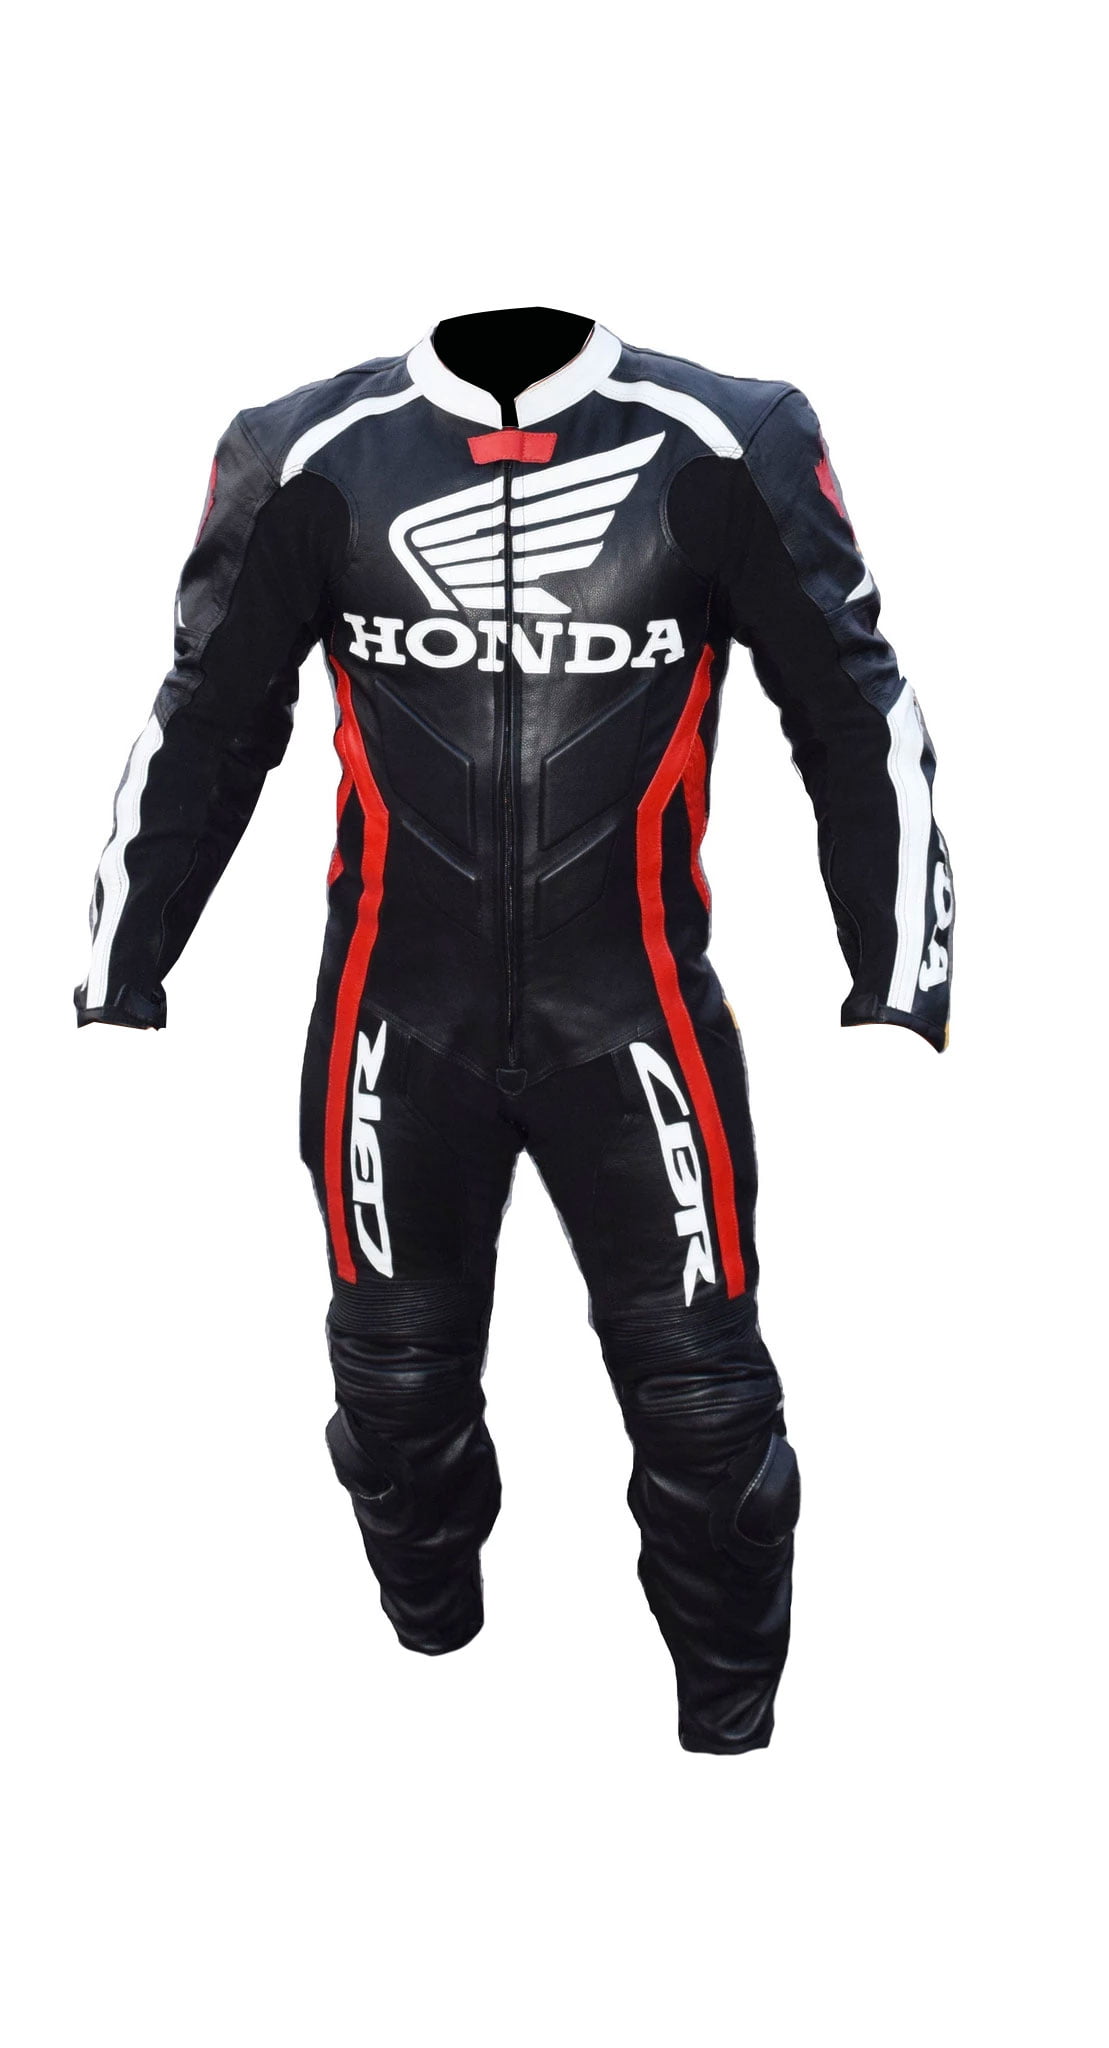 Honda Motorcycle Leather Racing Suit | Motogp Race Suit